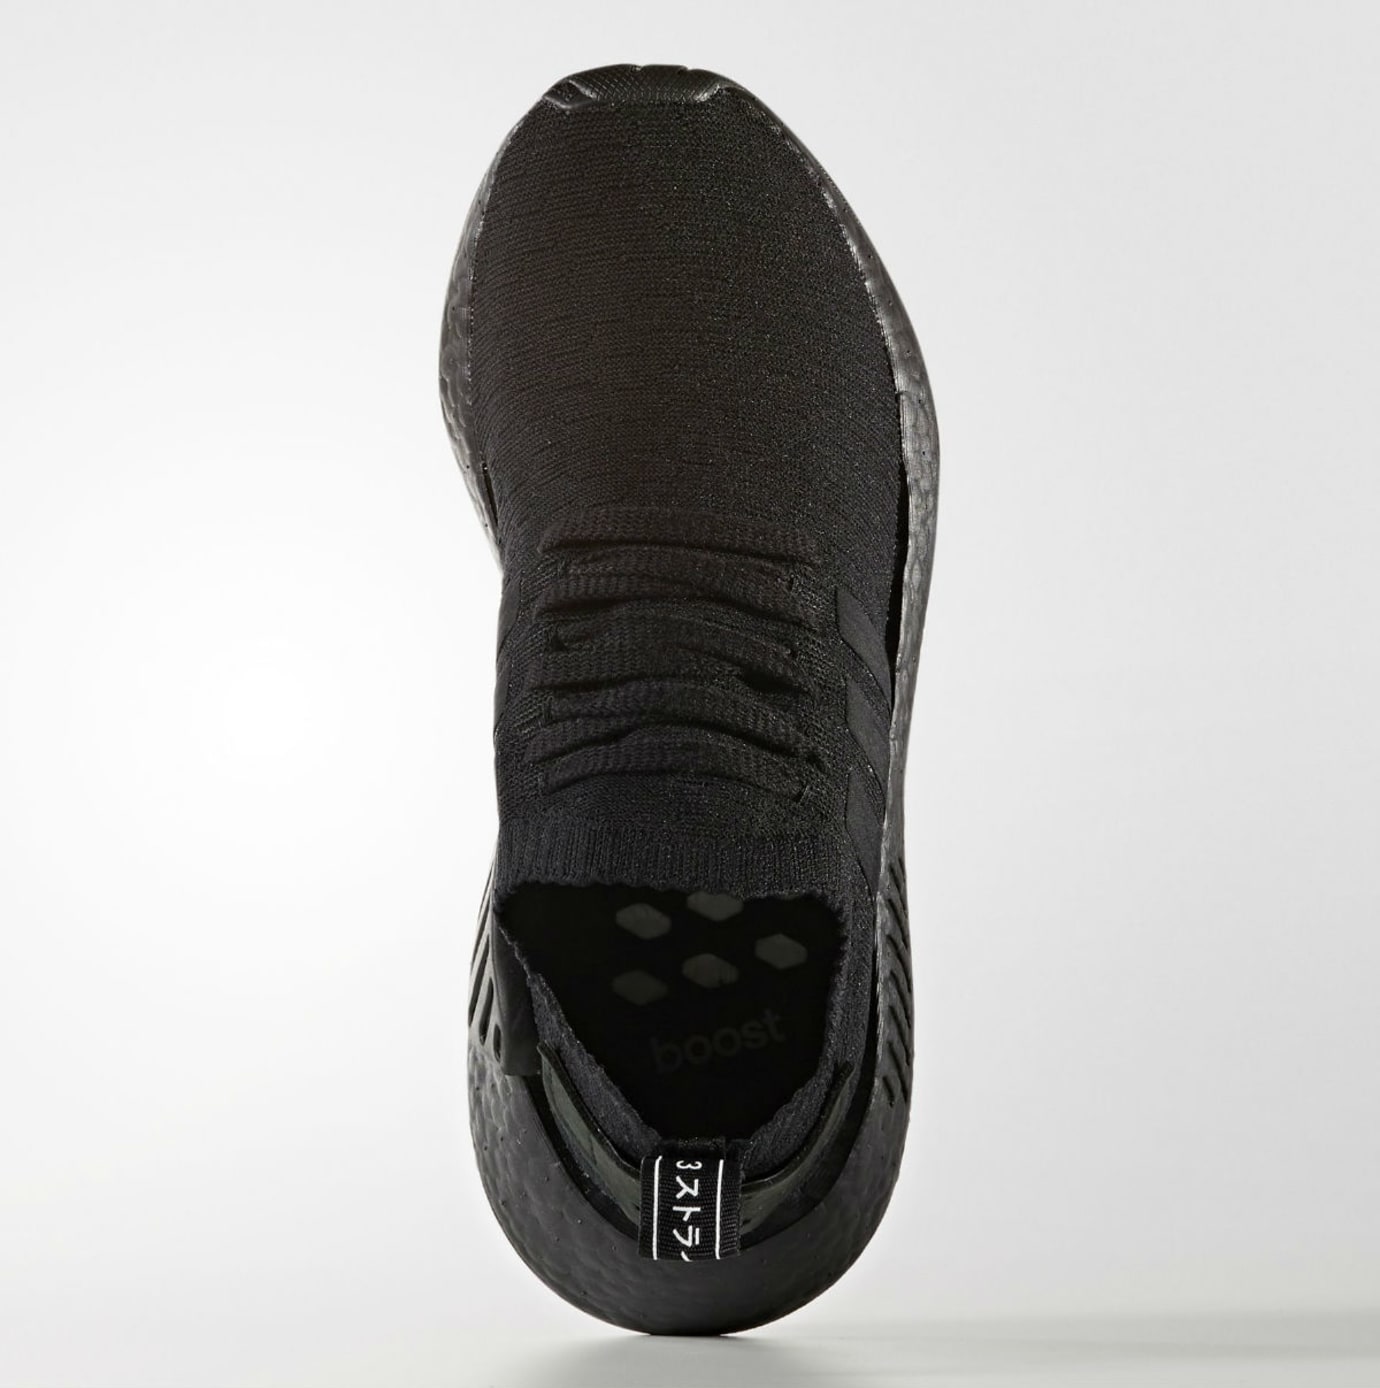 Adidas NMD R2 Triple Black Release Date |